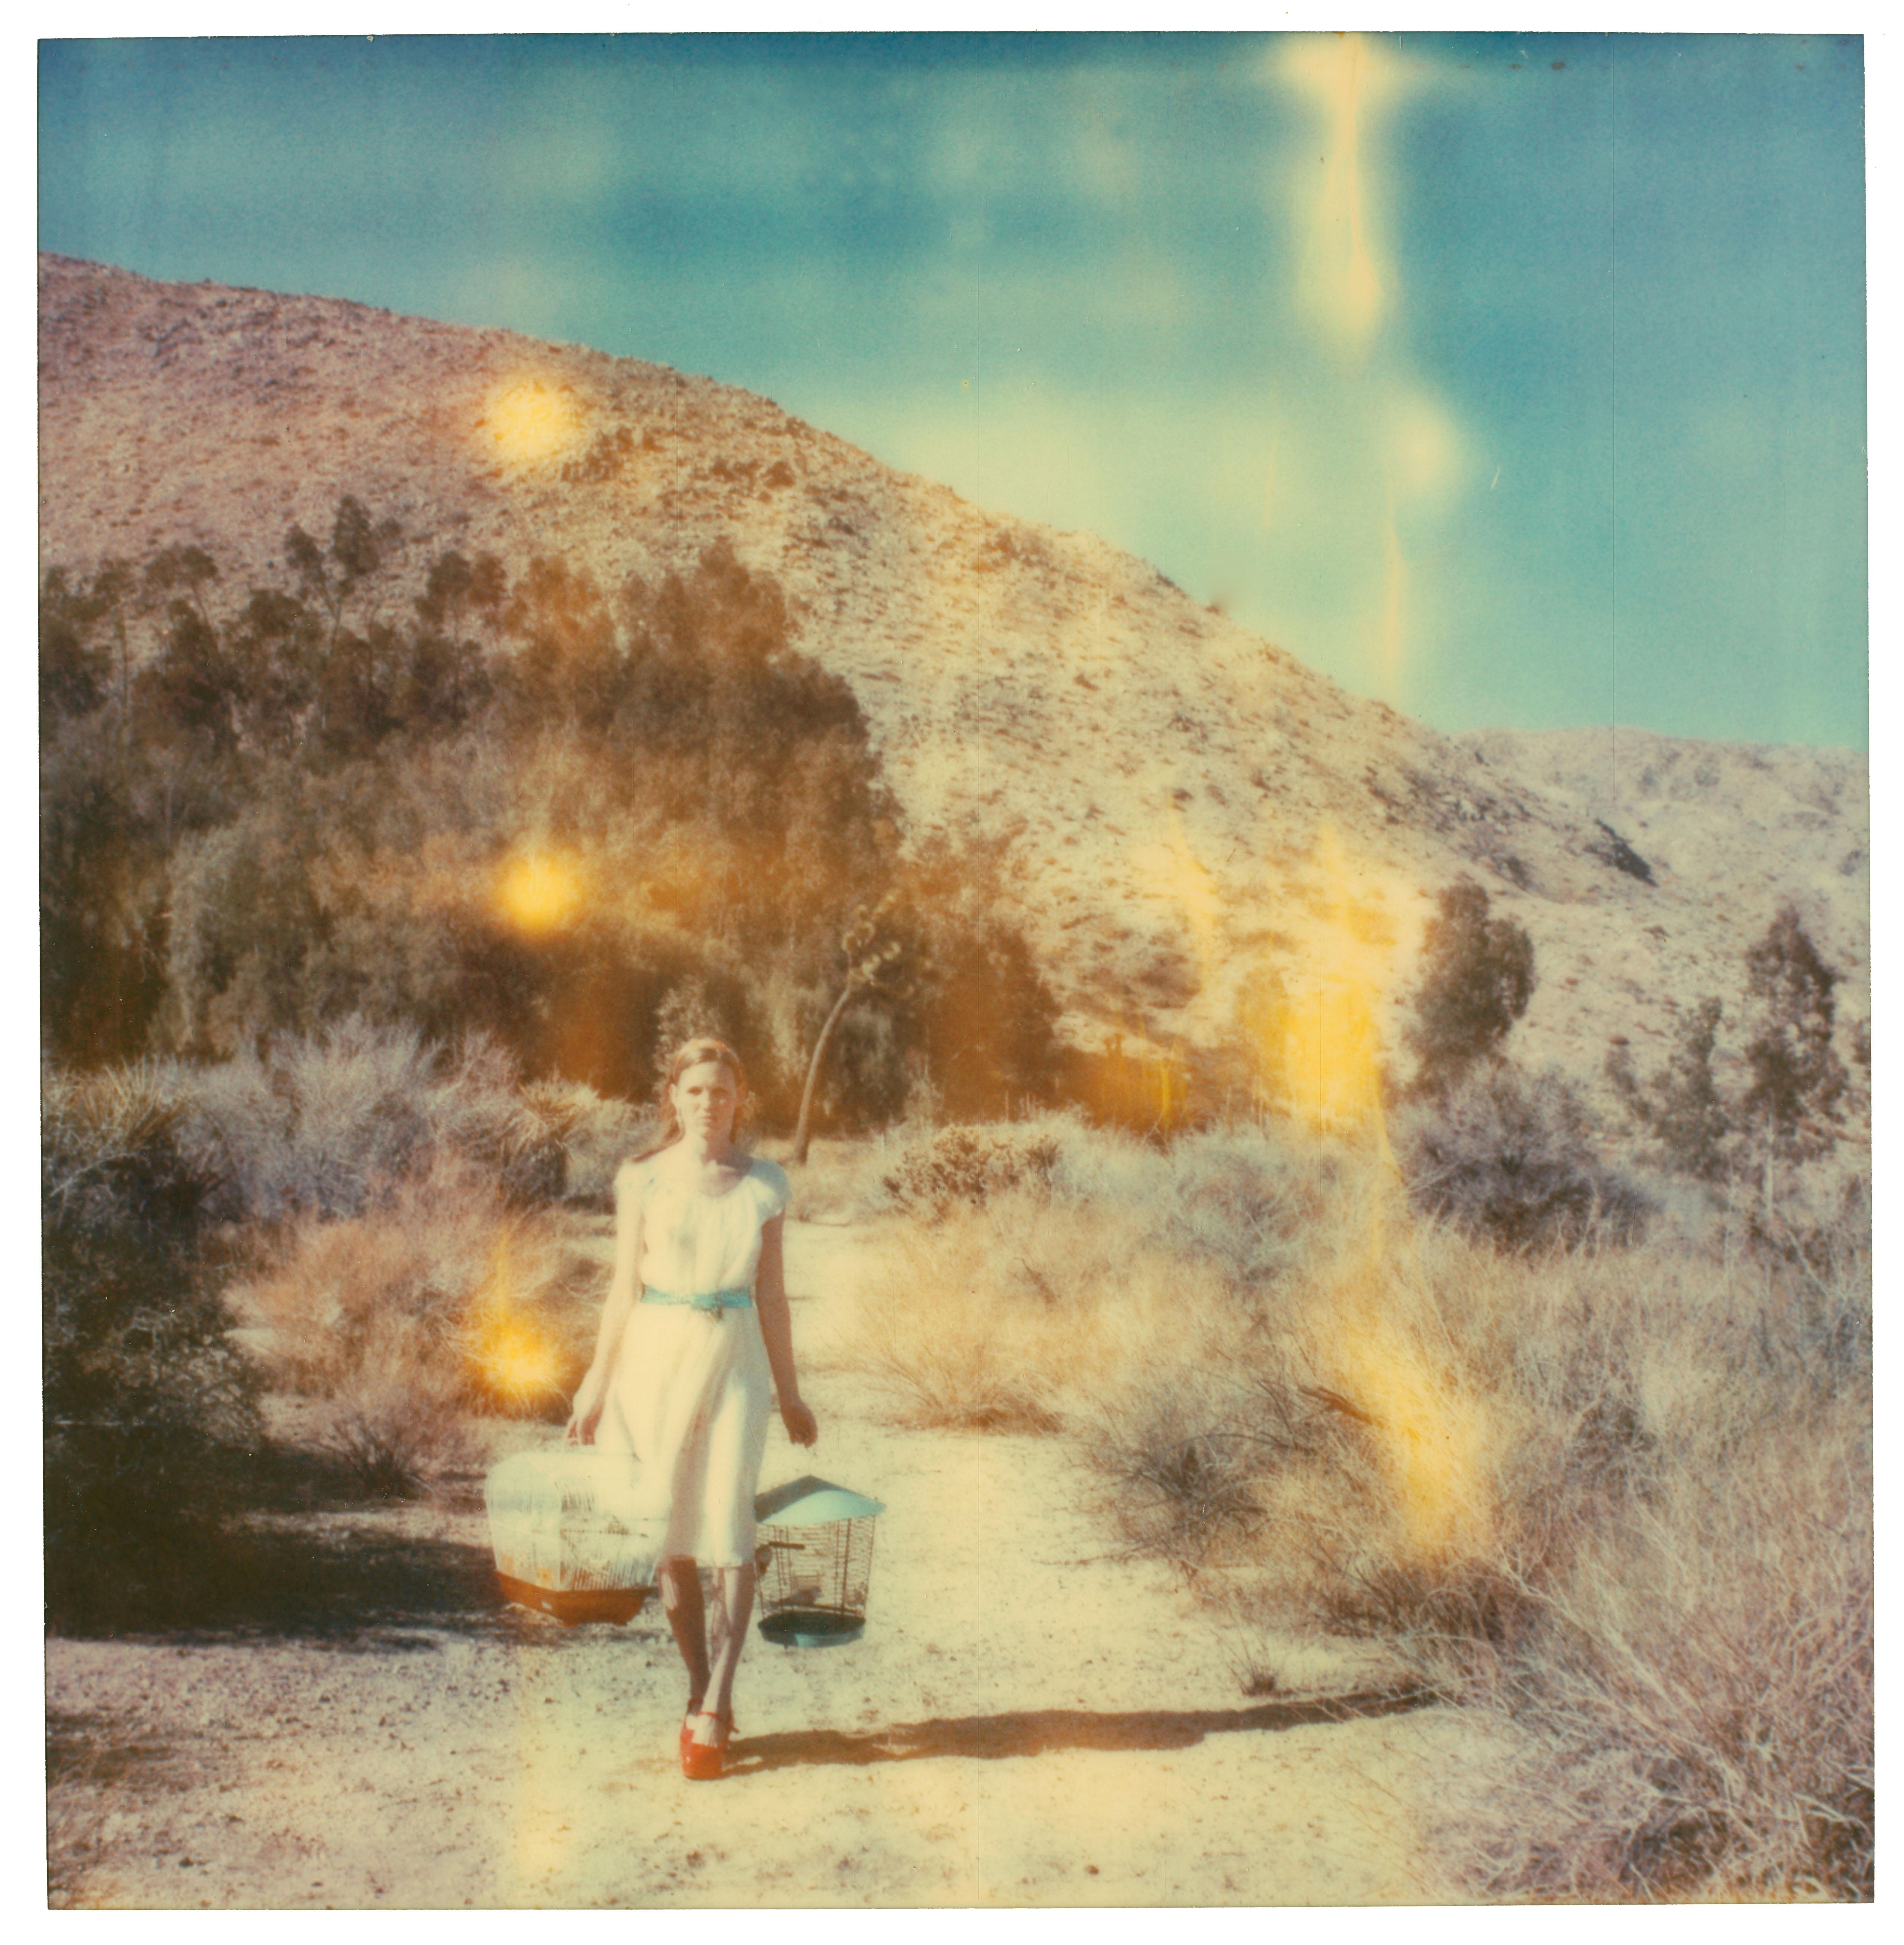 Stefanie Schneider Color Photograph - Memory Lane (Haley and the Birds) - 29 Palms, CA - based on a Polaroid Original